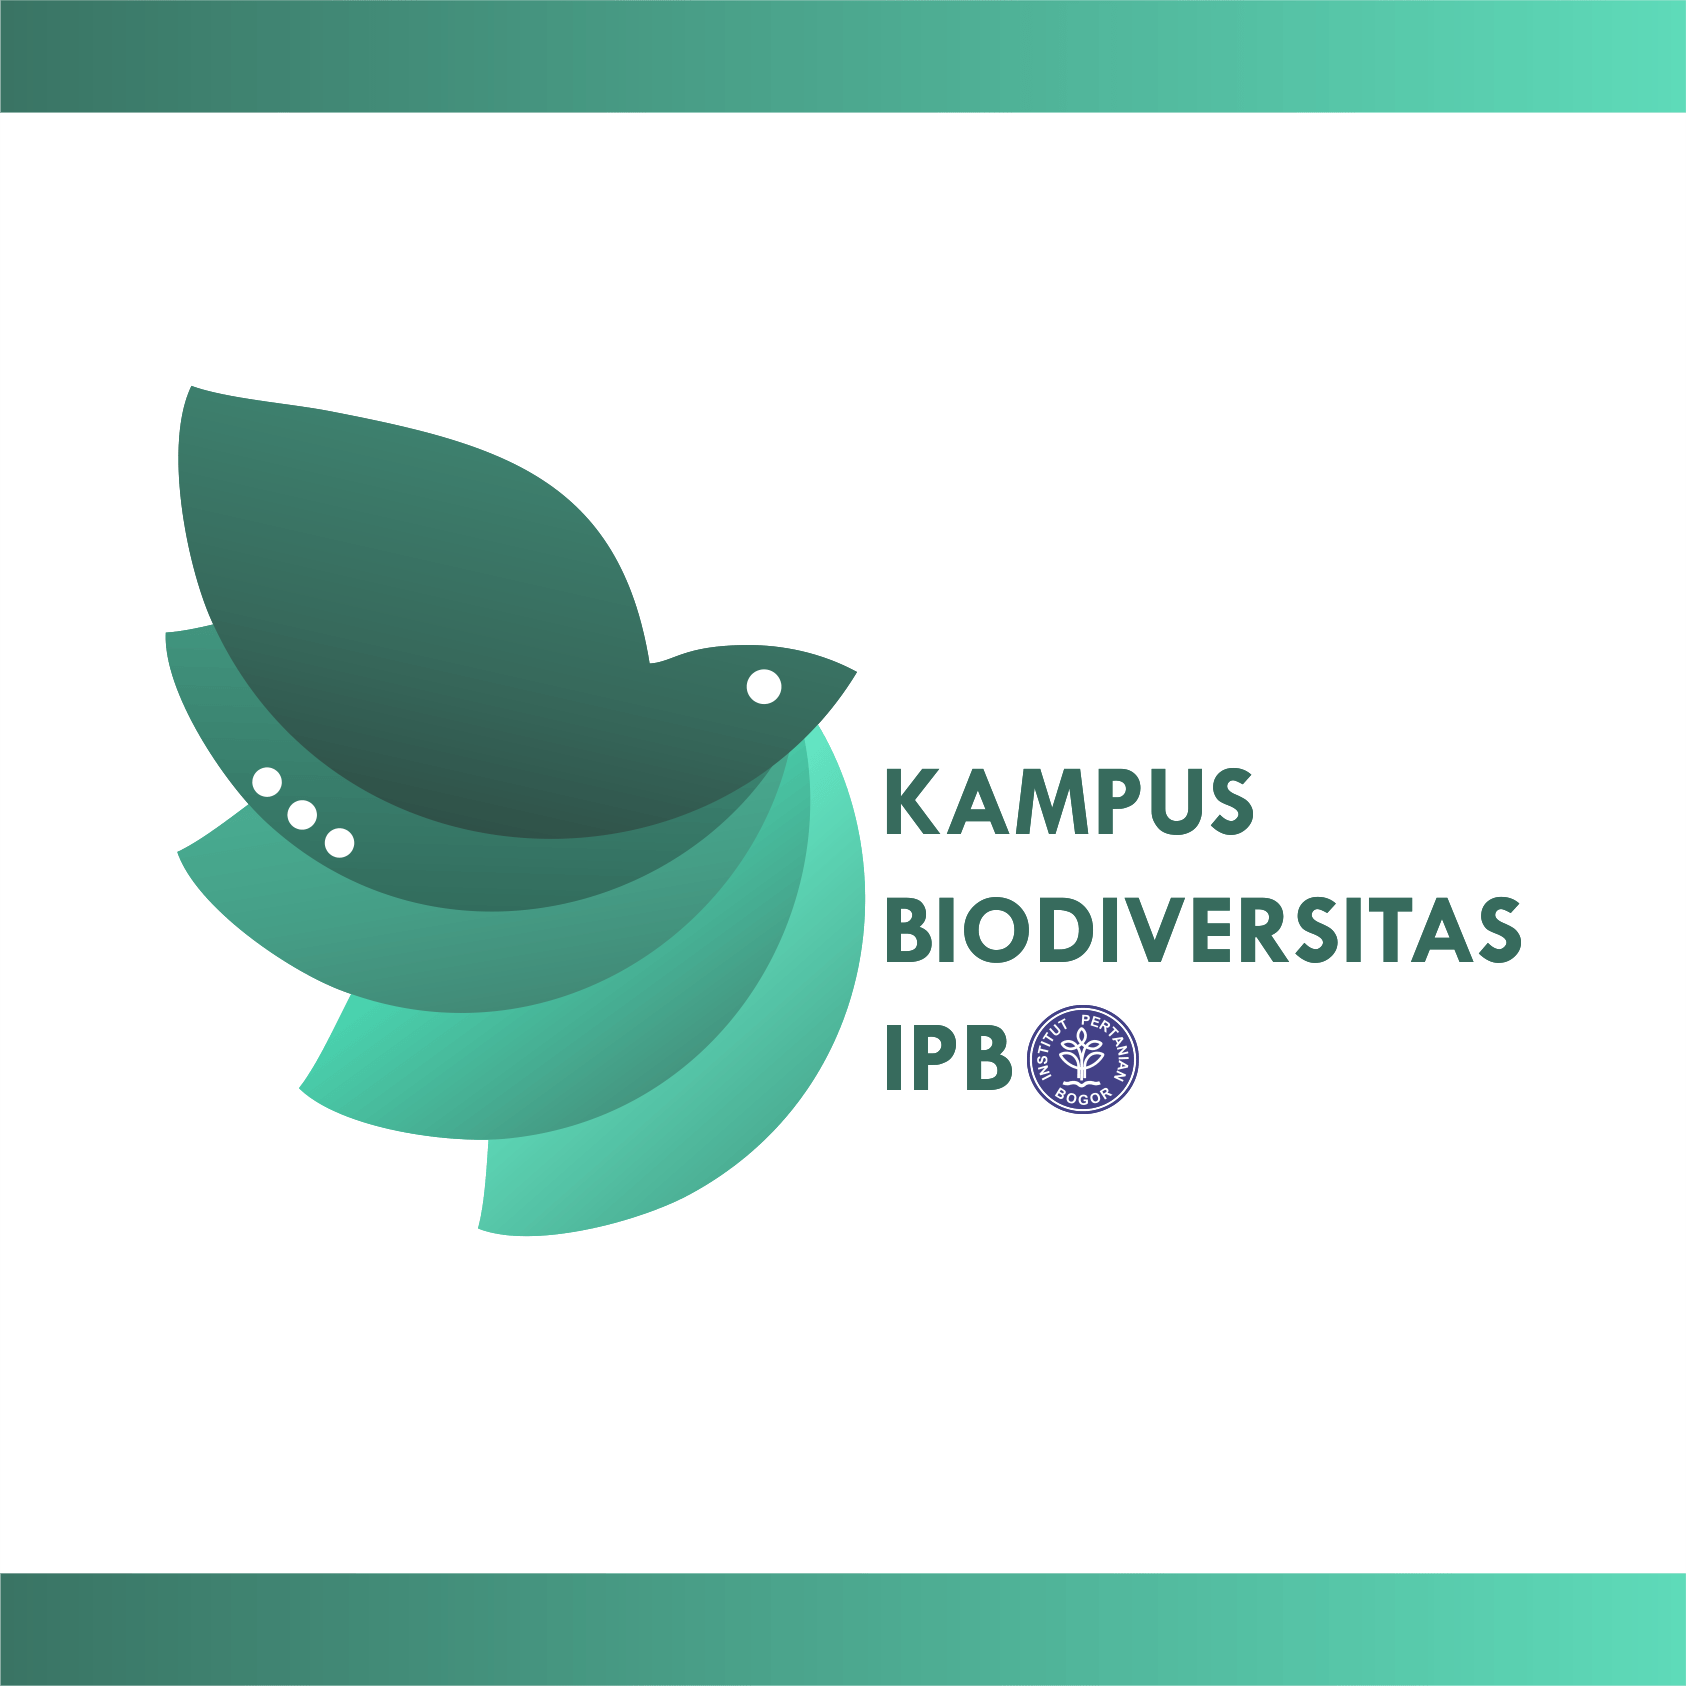 Calon Logo - calon Logo IPB kampus biodiversitas. Design. Design